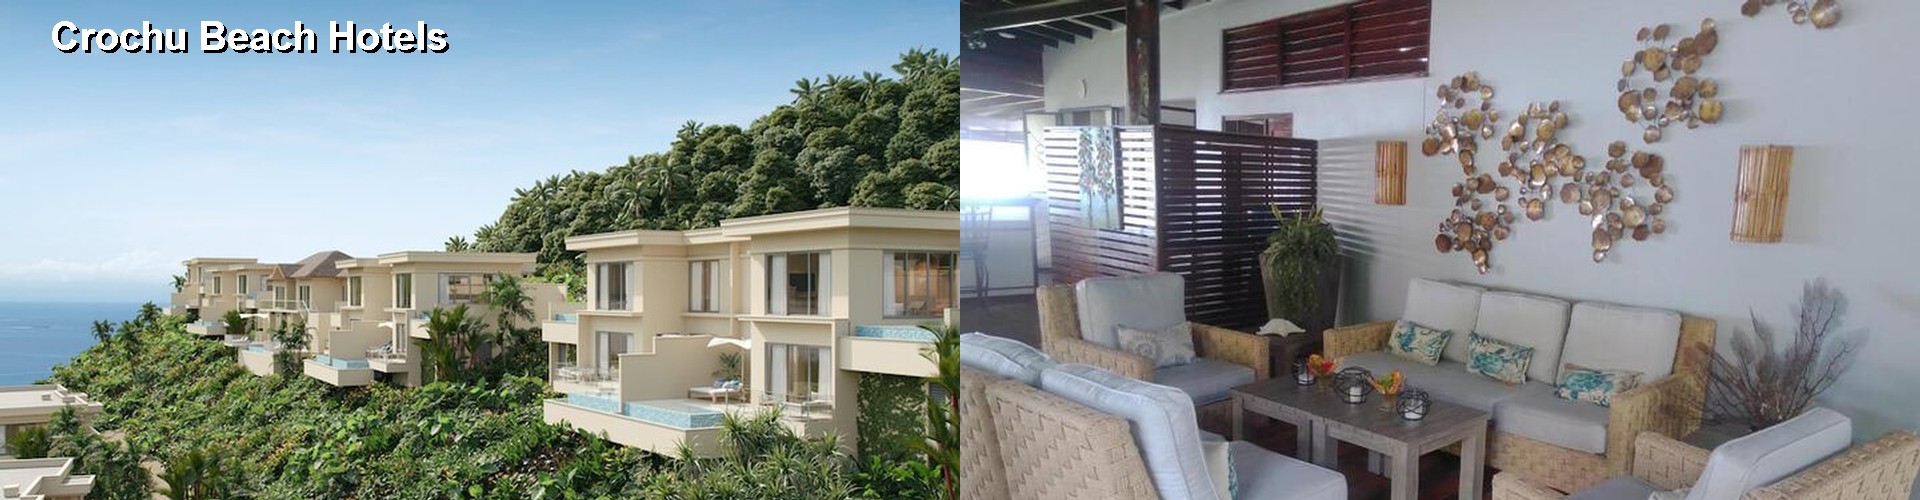 5 Best Hotels near Crochu Beach